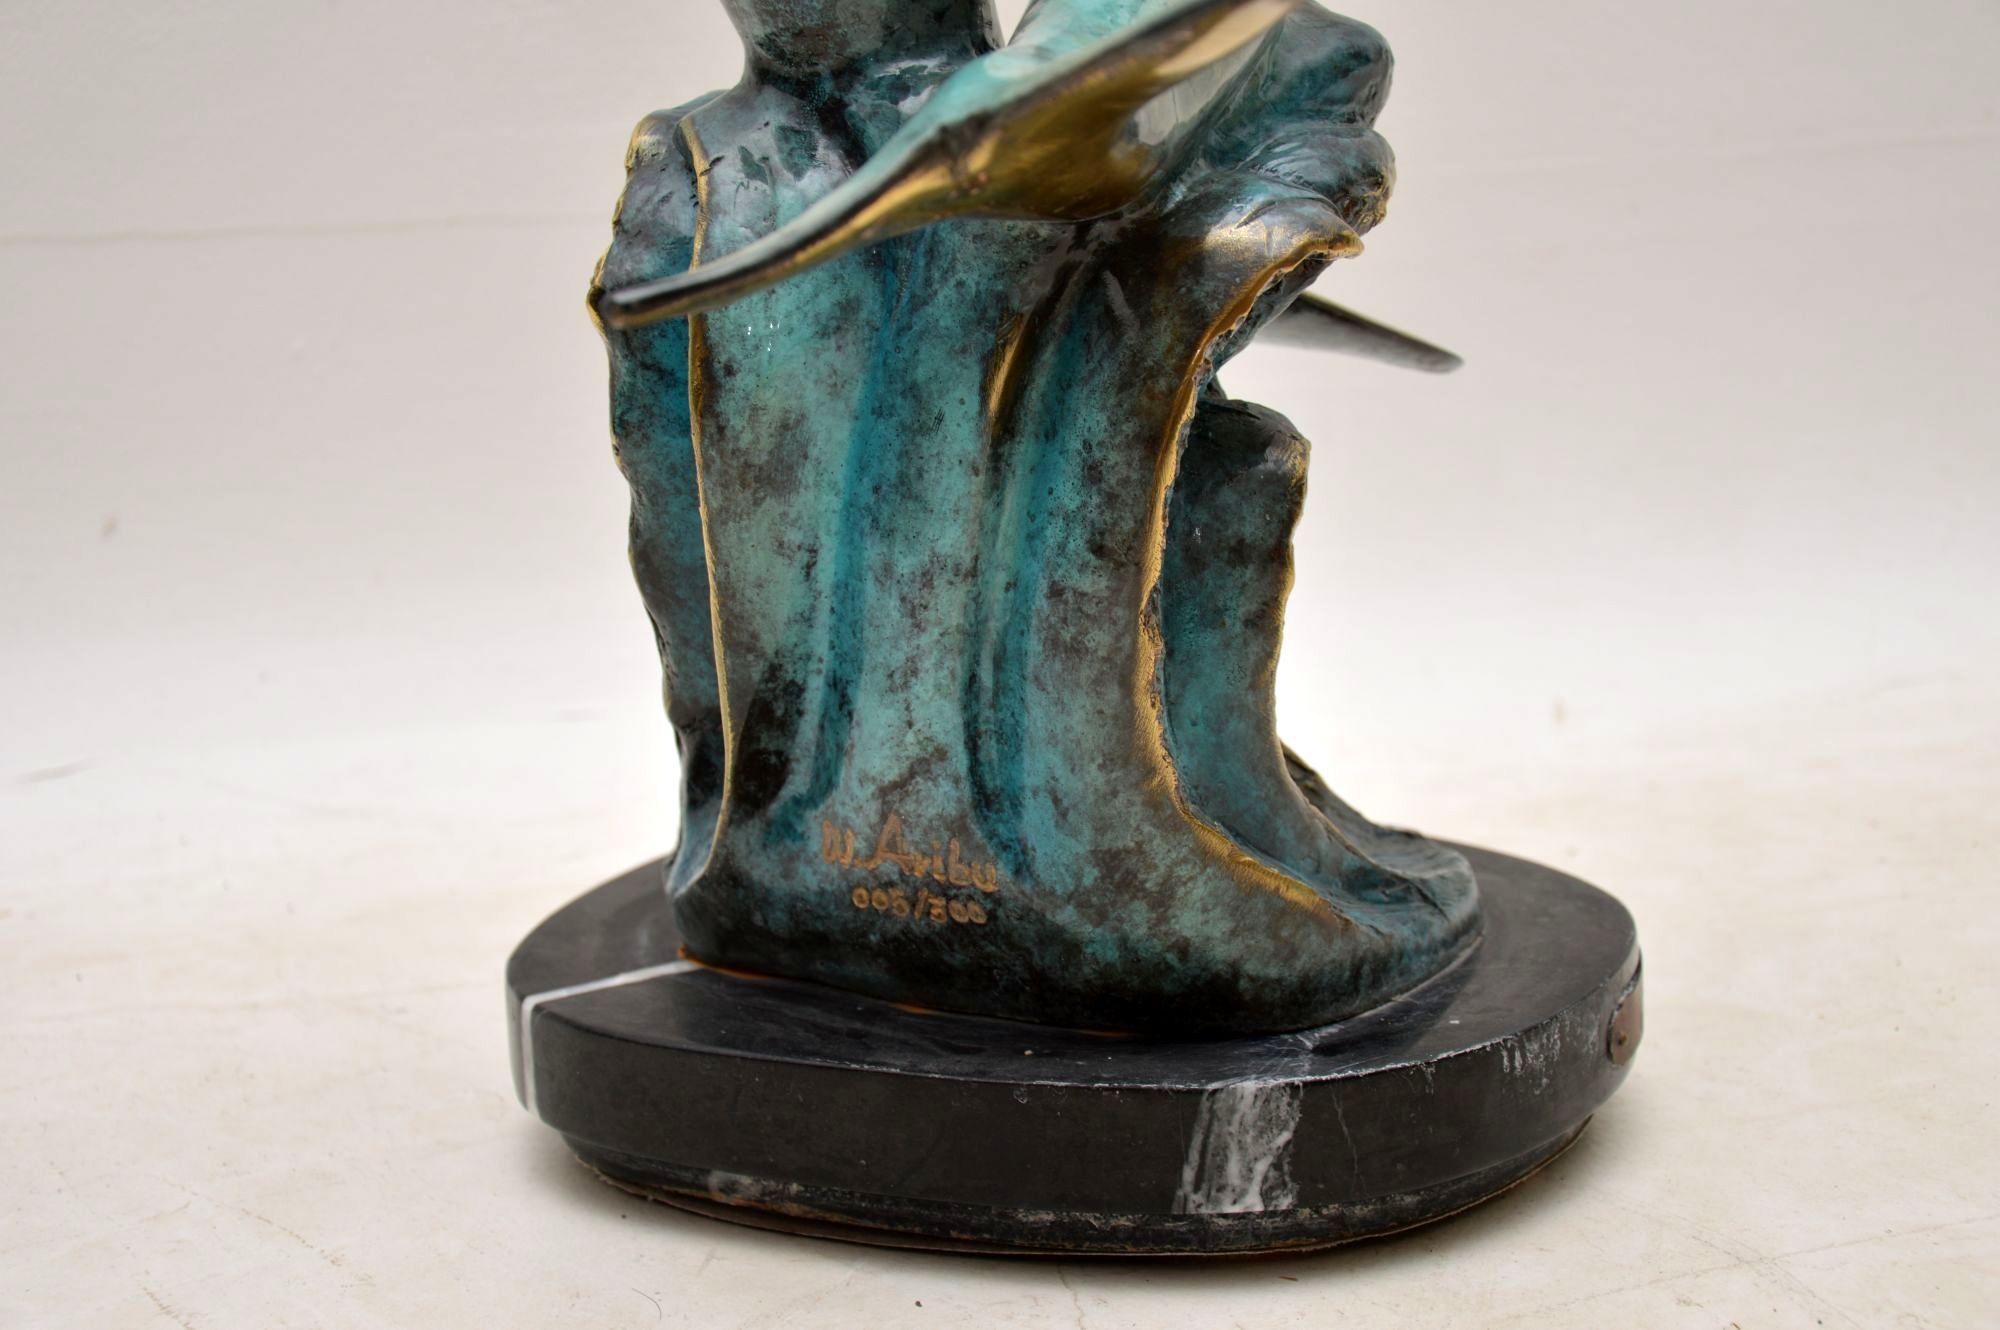 Limited Edition Bronze Sculpture by W. Aribu, “Pals 1” 005/300 5